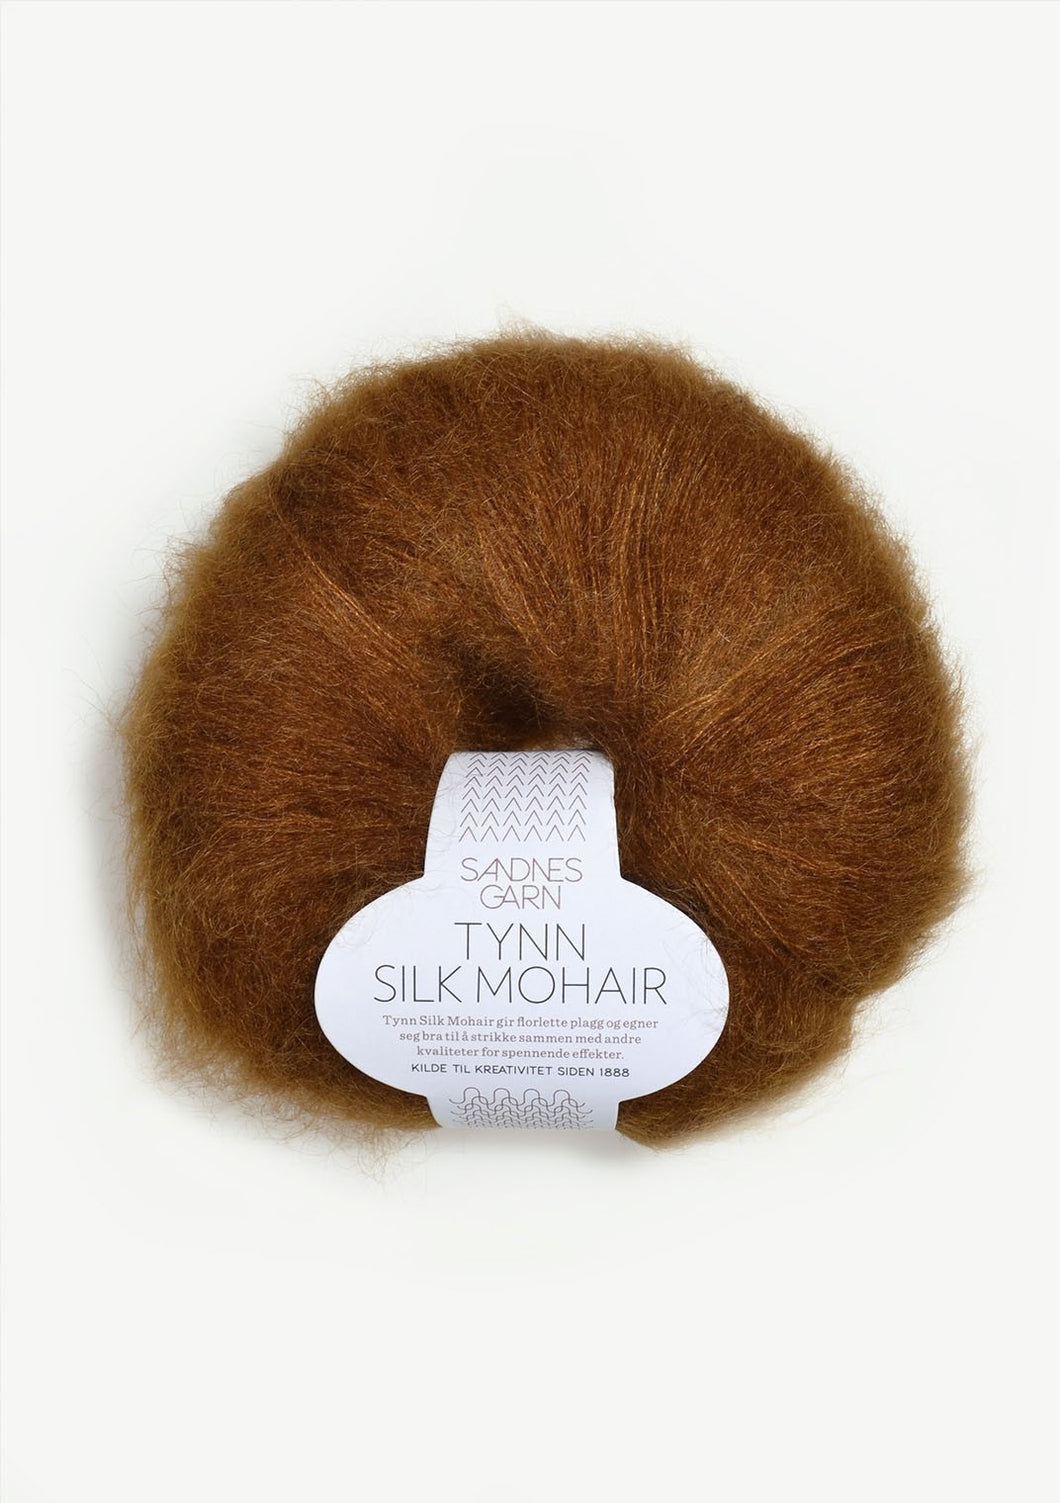 Sandnes Tynn Silk Mohair - Golden Brown 2755